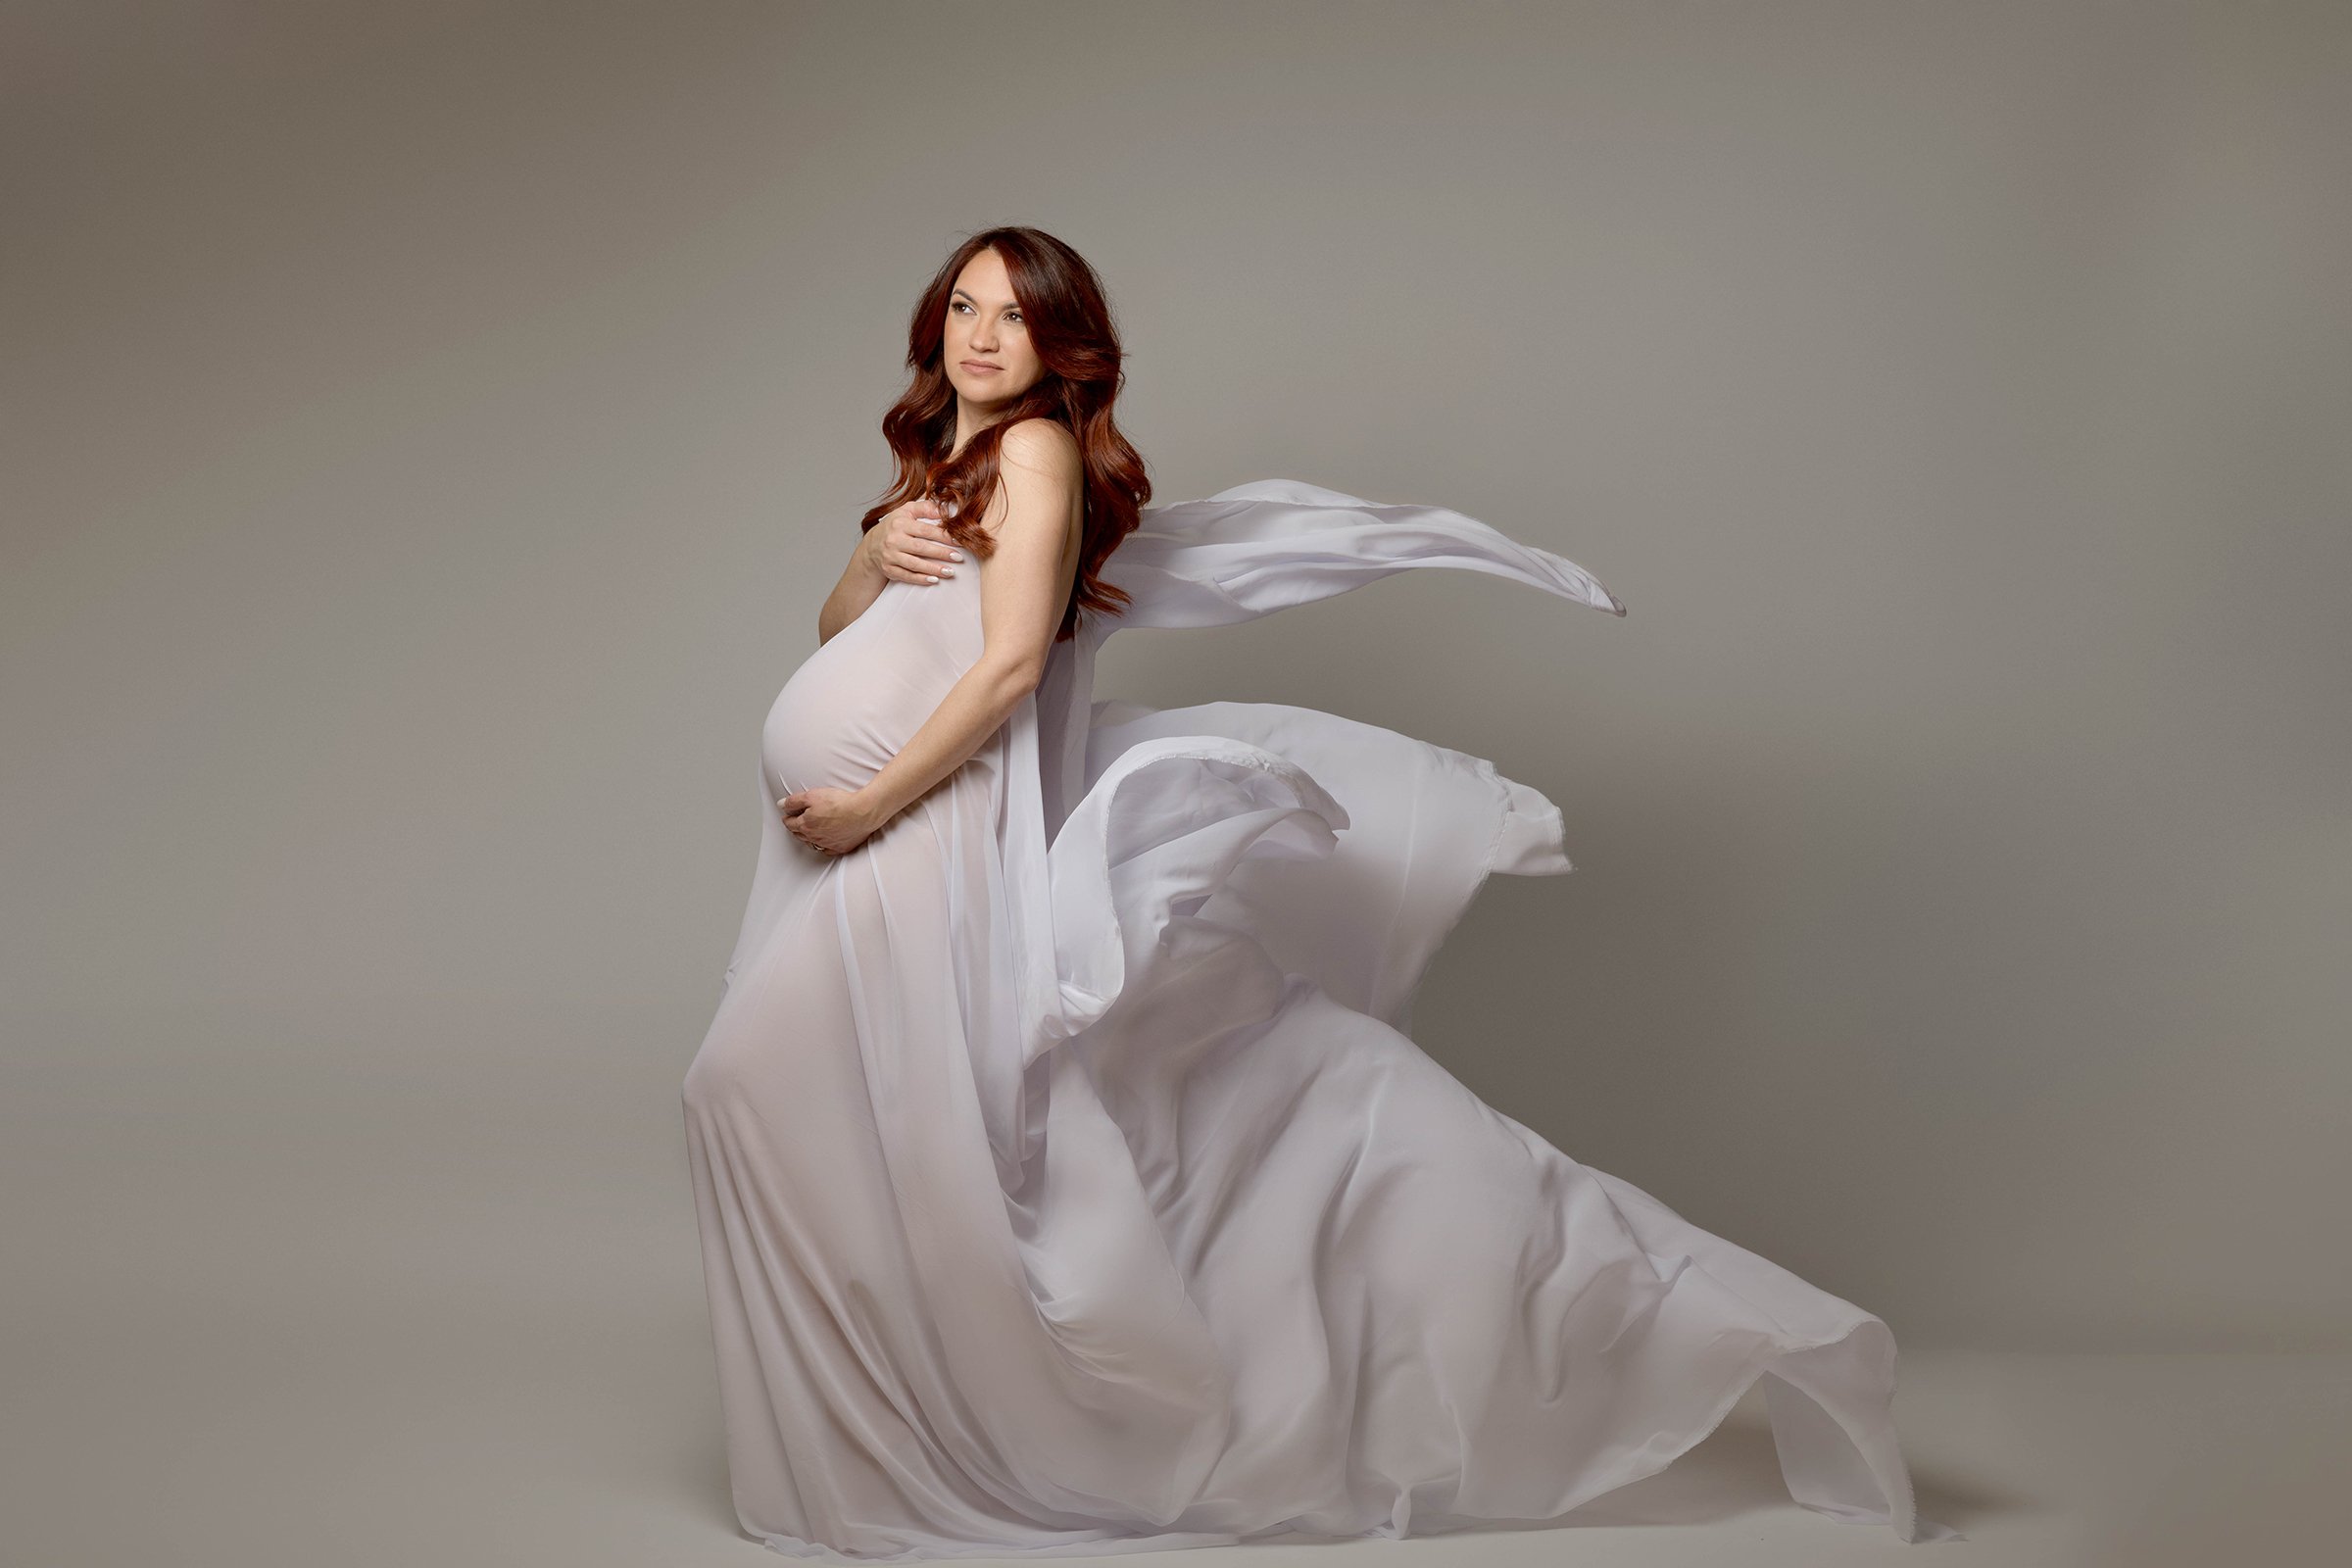 maternity-pregnancy-photographer-san-juan-puerto-rico-fabric-dress-gown-fotografa-maternidad-embarazo-33.jpg